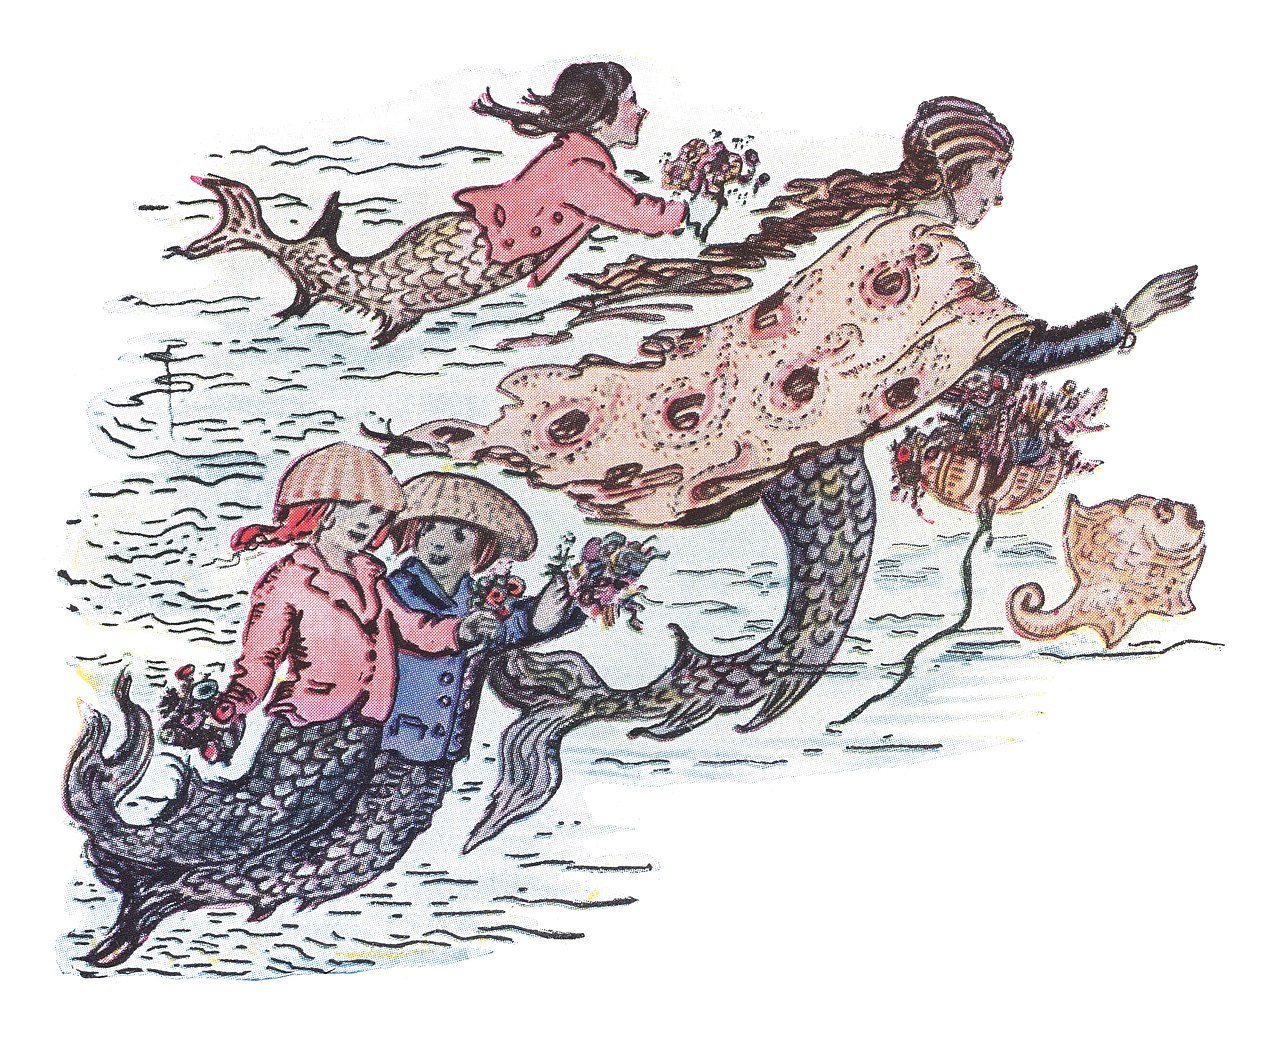 Illustration of mermaids